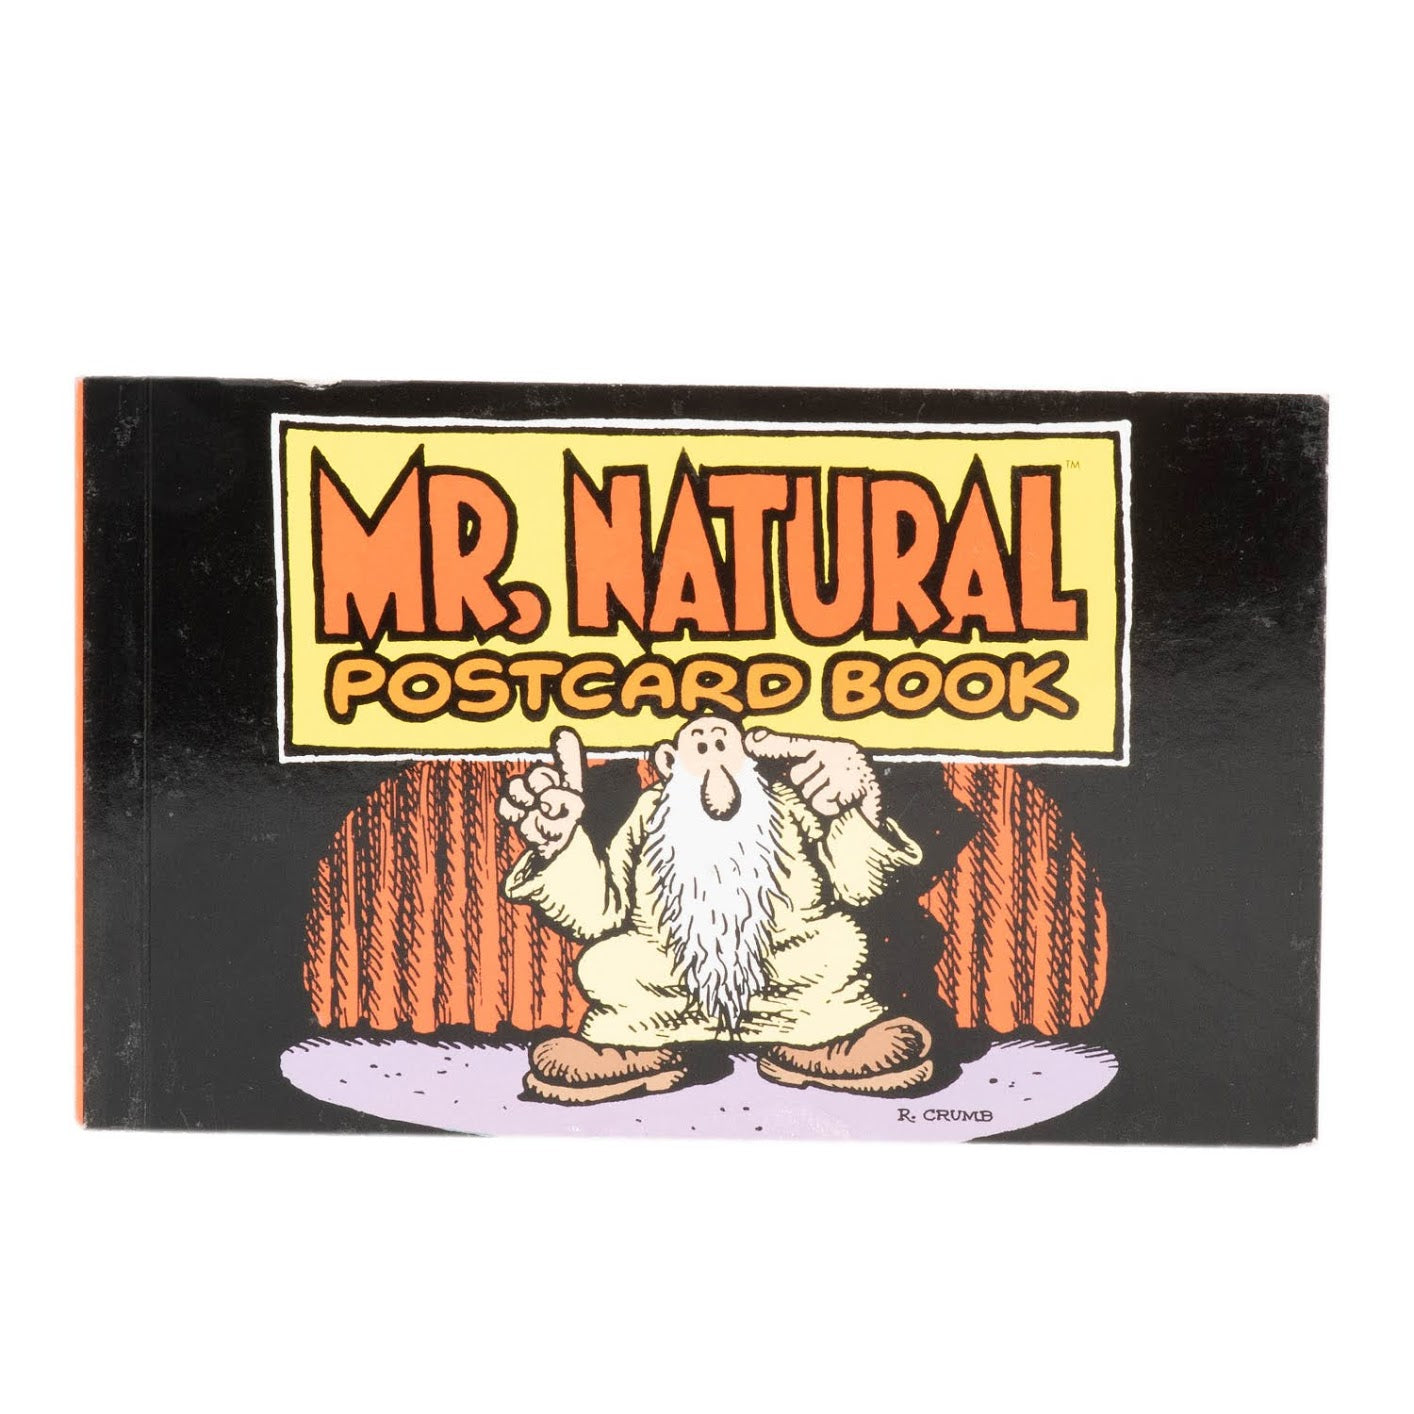 CIRCLES BOOKS Mr. Natural Postcard Book by R. Crumb